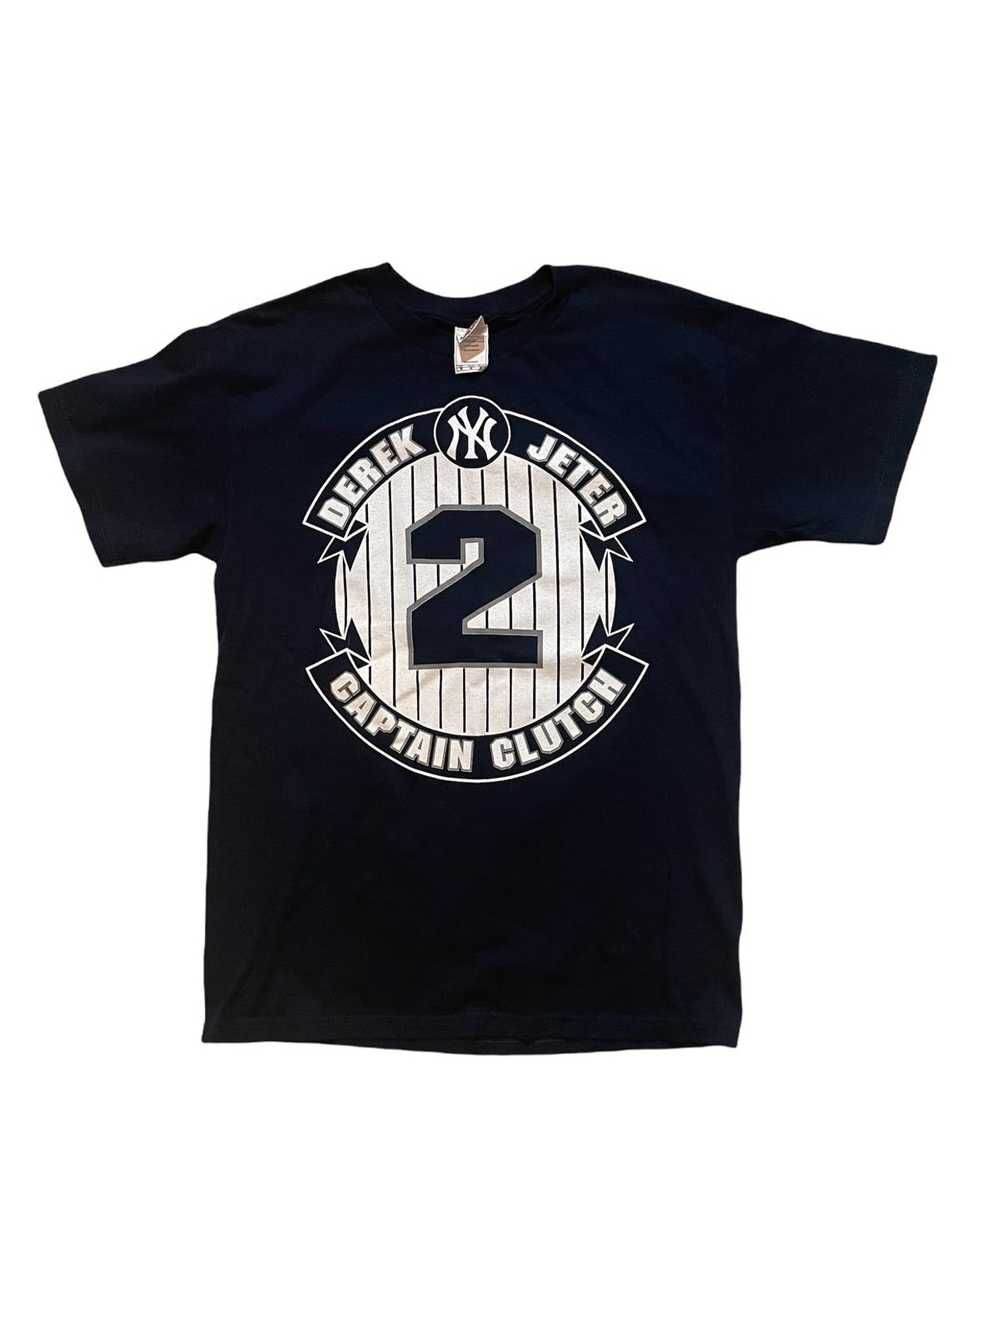 New York Yankees Athletics Tee Shirt – 3 Red Rovers